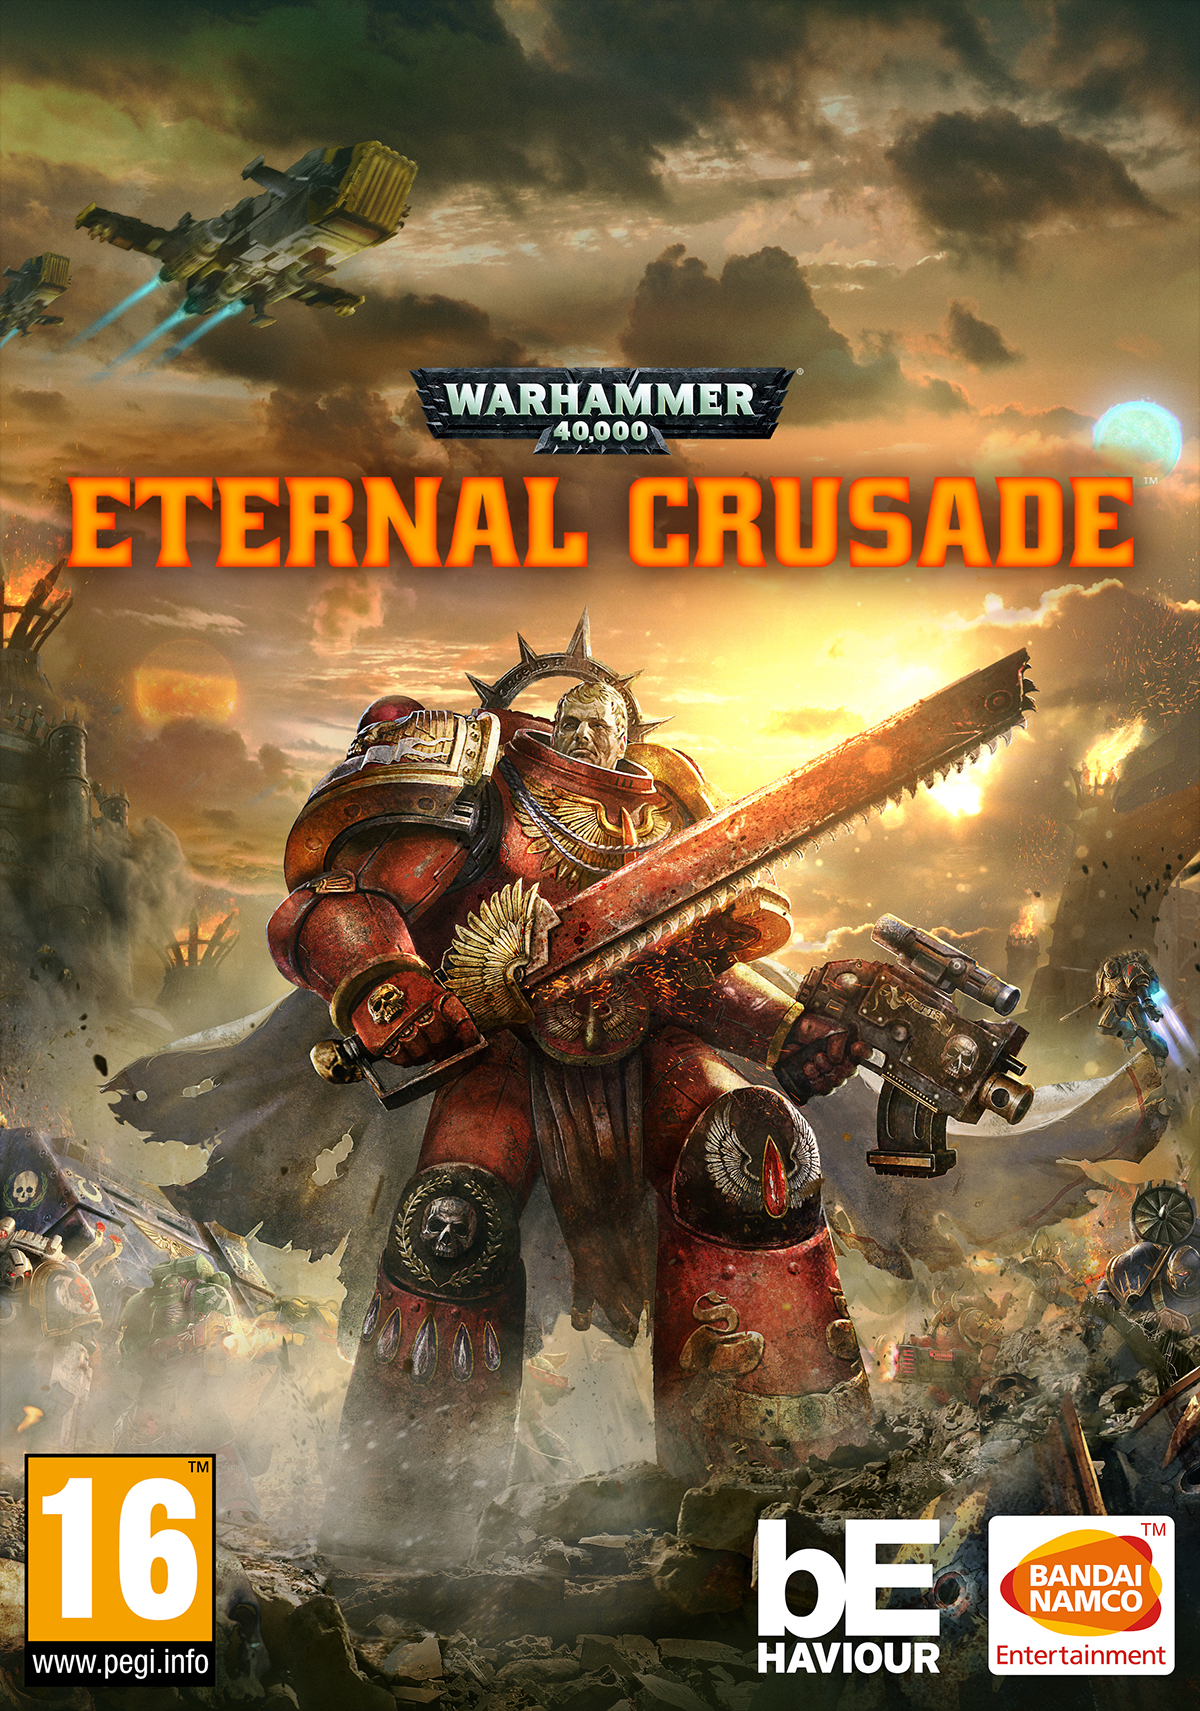 Warhammer warhammer 40k warhammer 40000 eternal crusade Space Marine video game mmorpg game science fantasy Space  videogame cover Pack